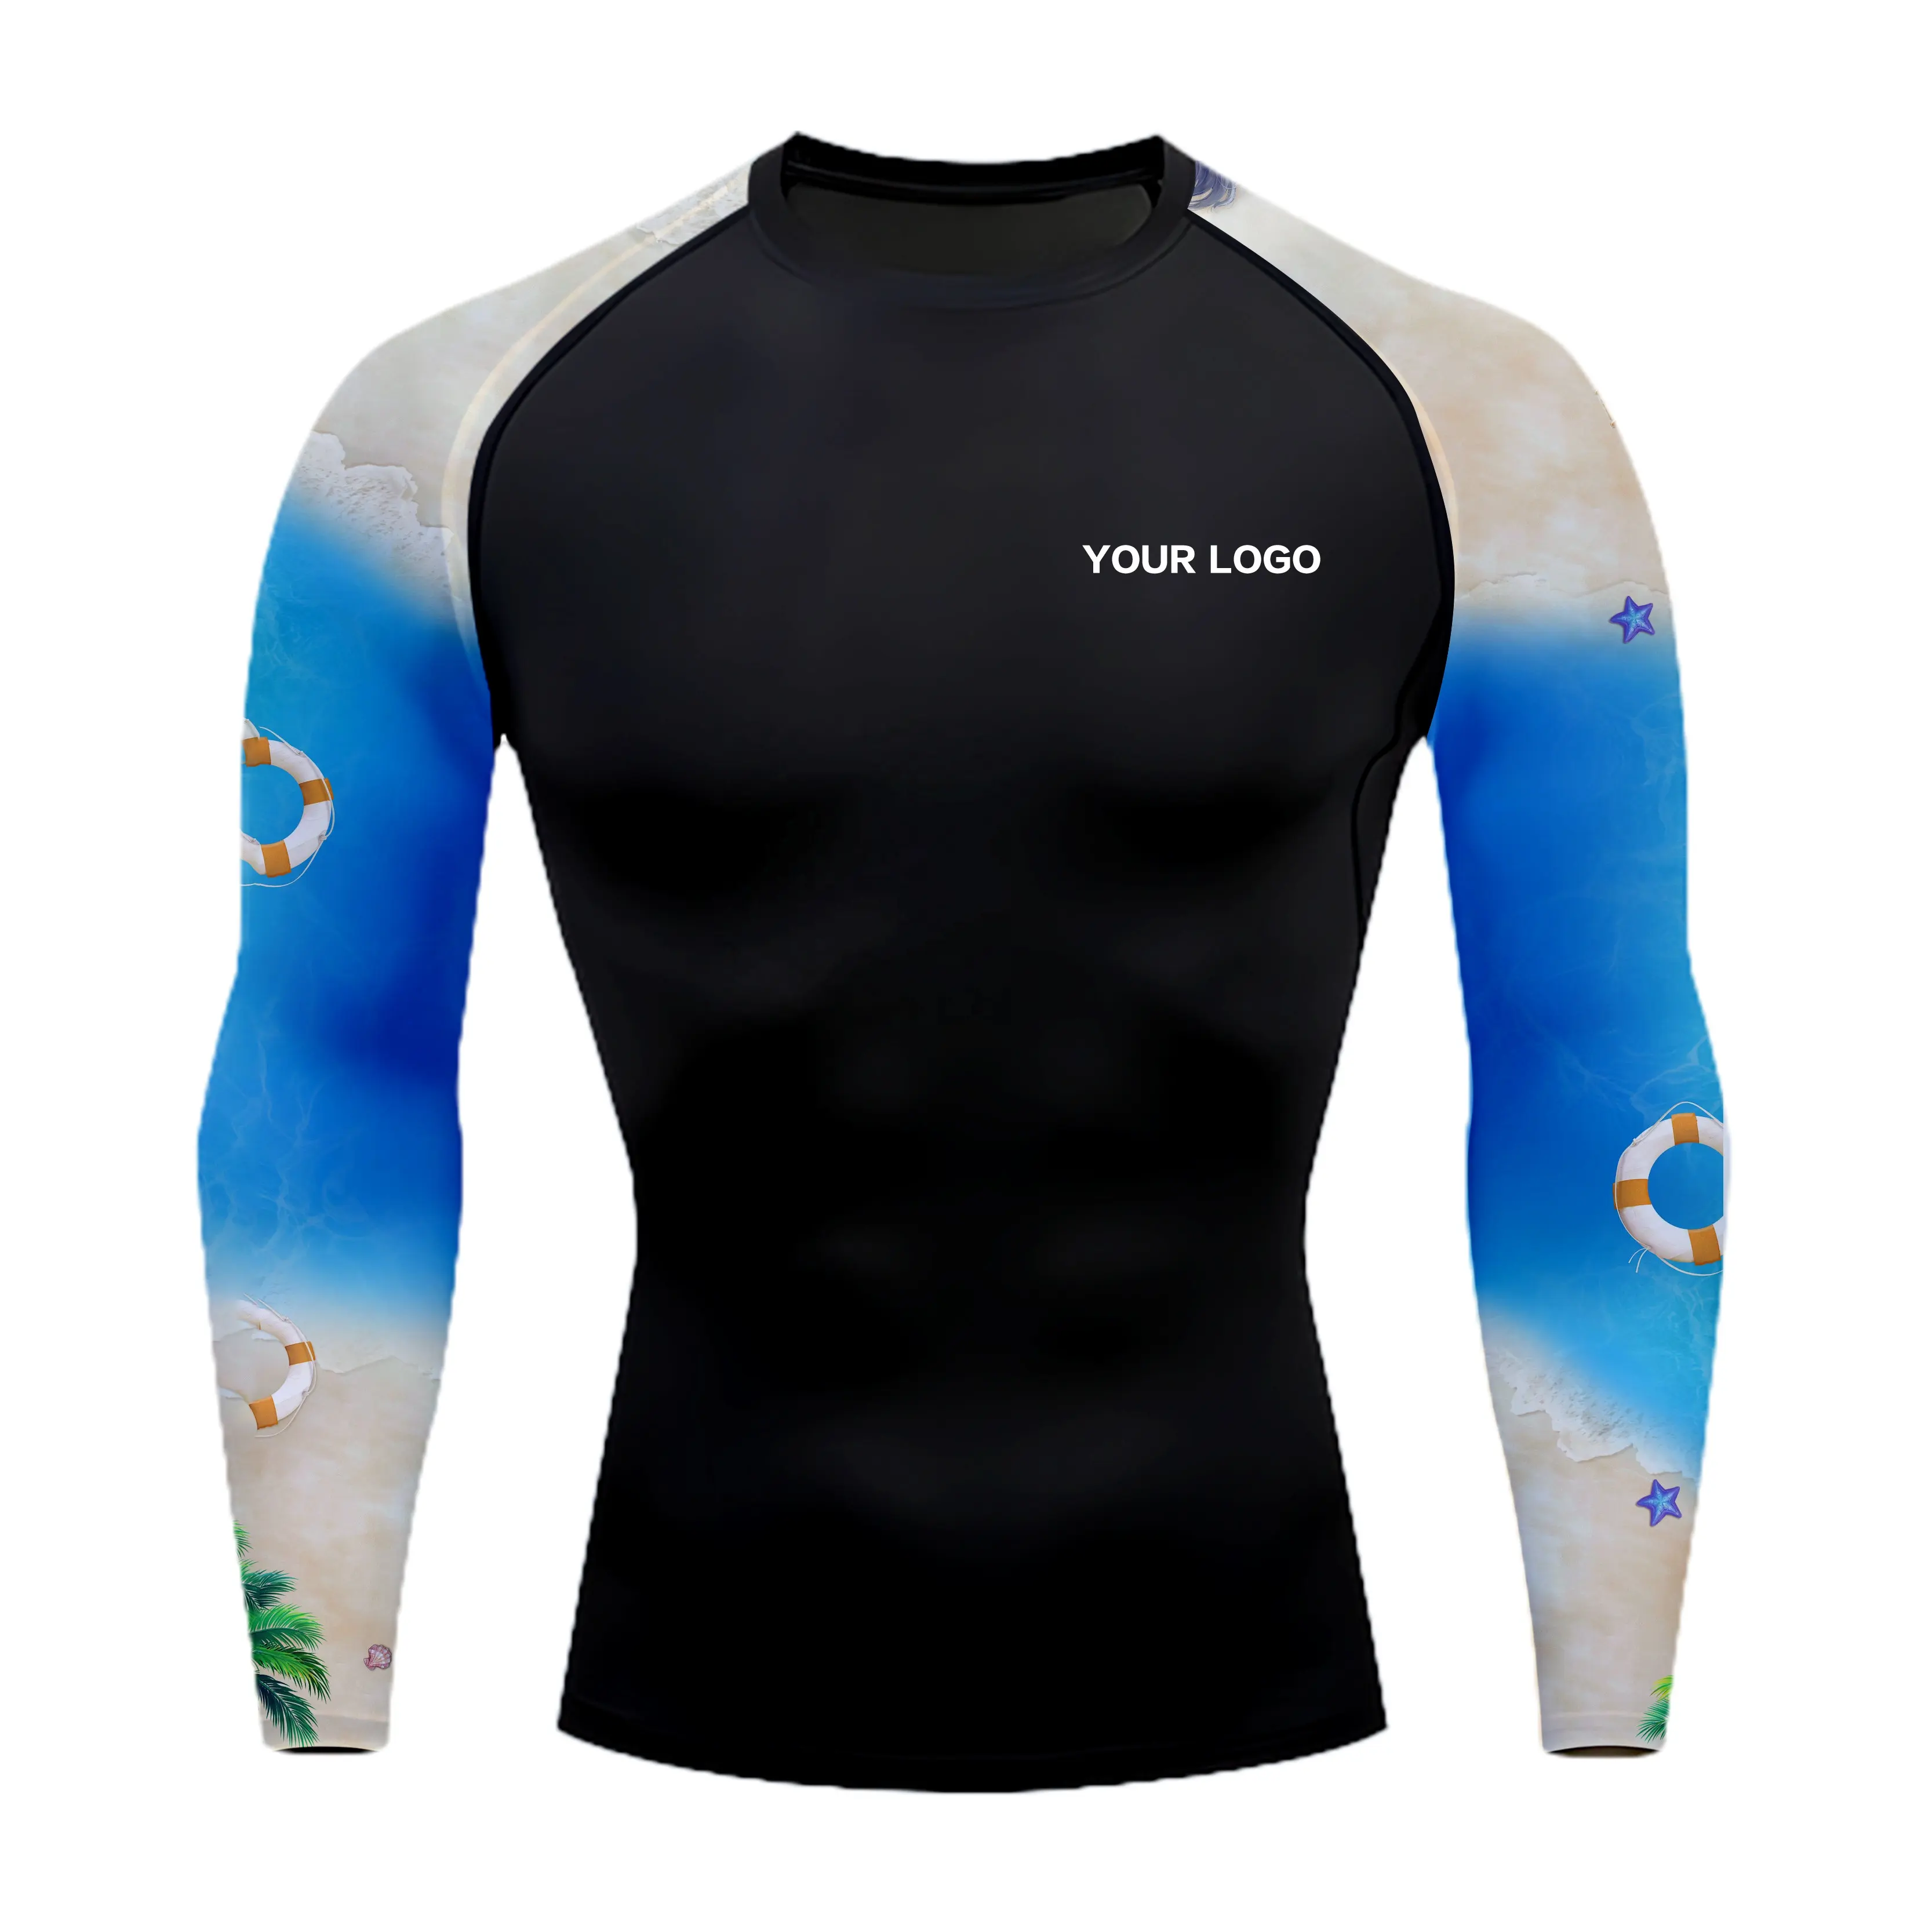 OEM Custom Design Your Own Rash Guard Uv Protection Long Sleeve UPF 50+ Compression Shirt Surfing Rash Guards